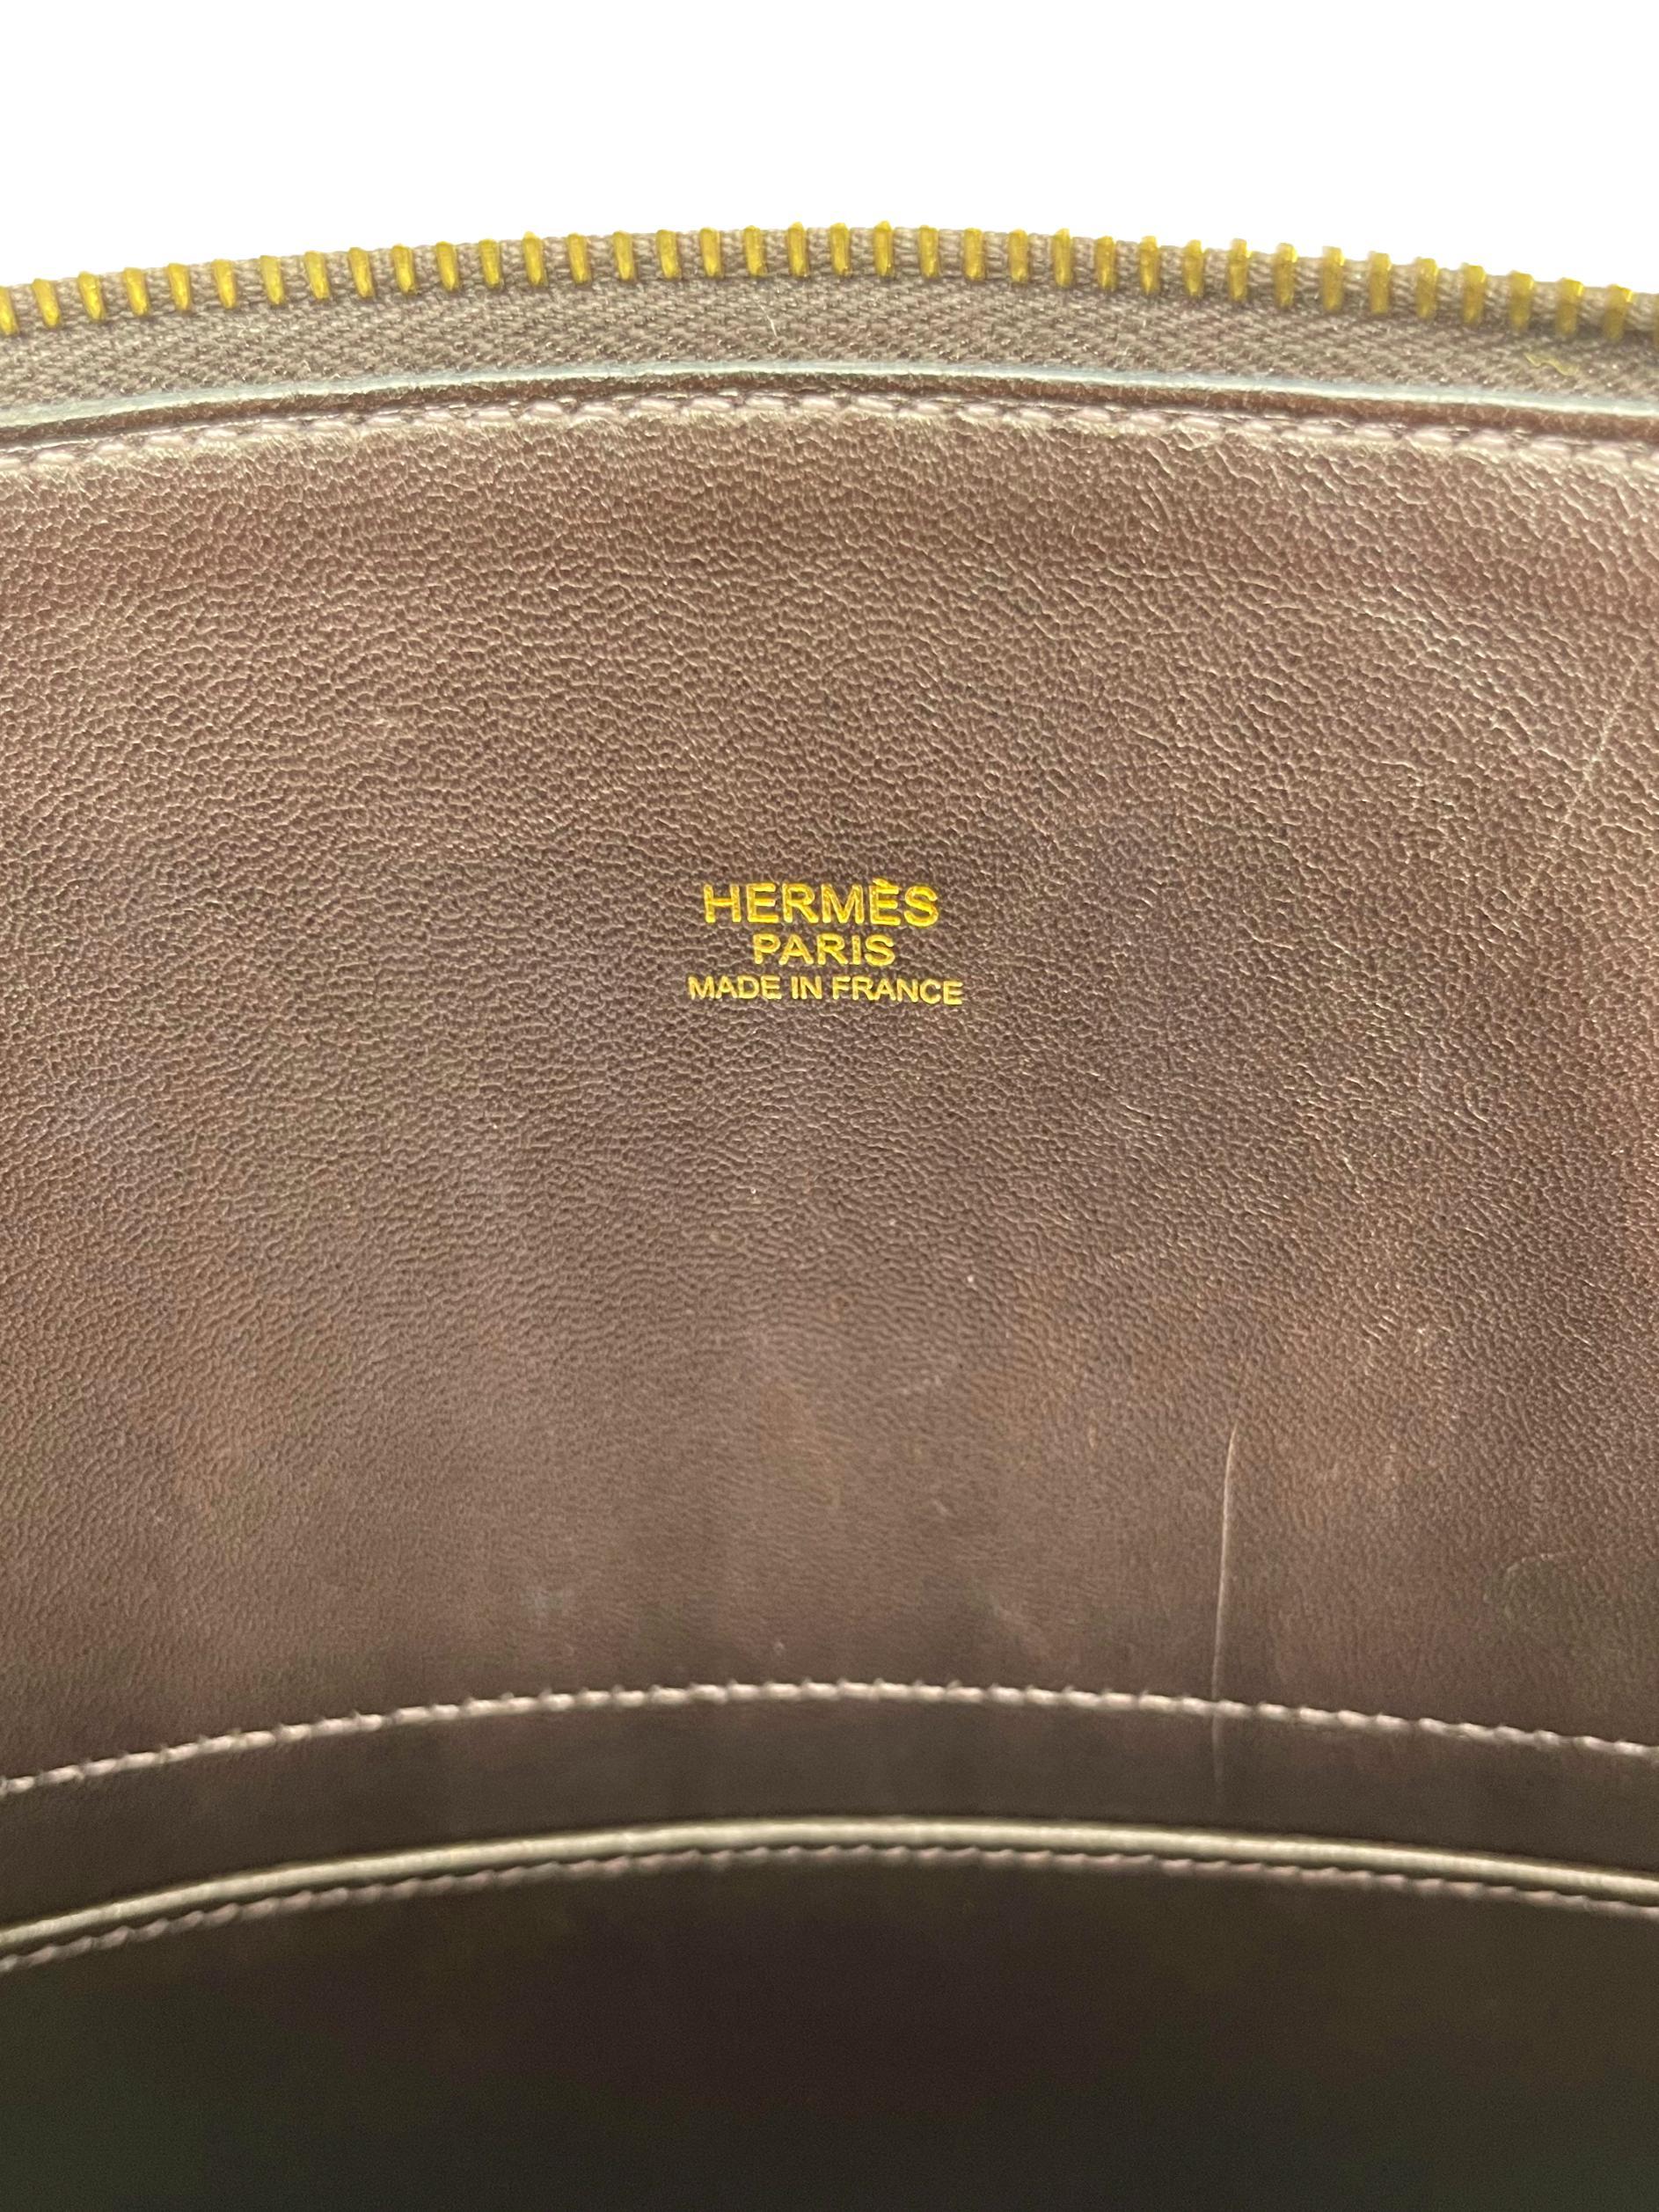 Hermès Limited Edition Ébene Evercalf & Troika Ponyhair Bolide Bag 35cm, 2007. 13